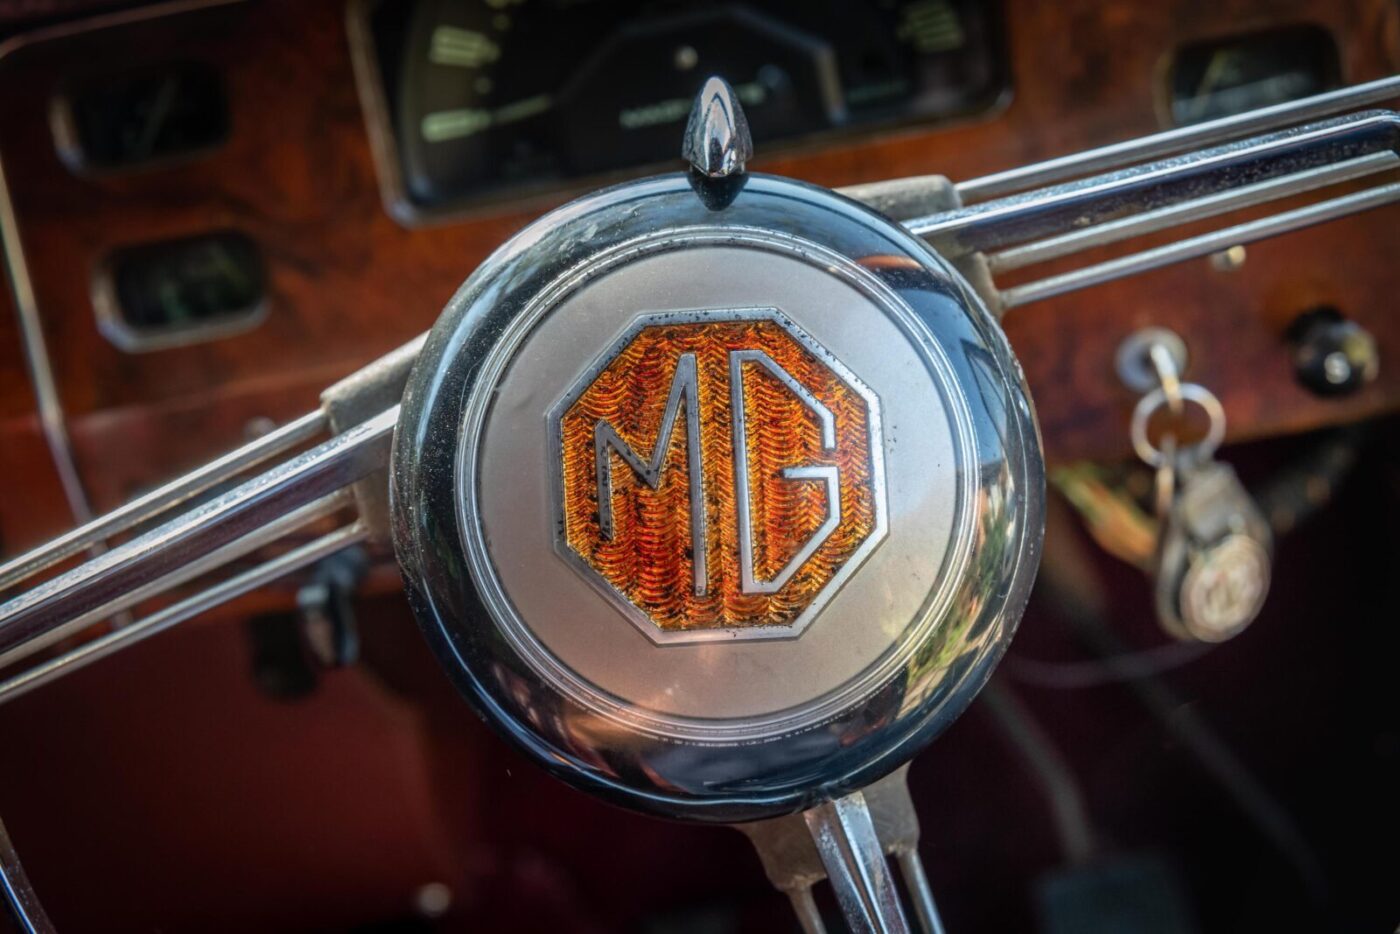 MG Magnette steering wheel